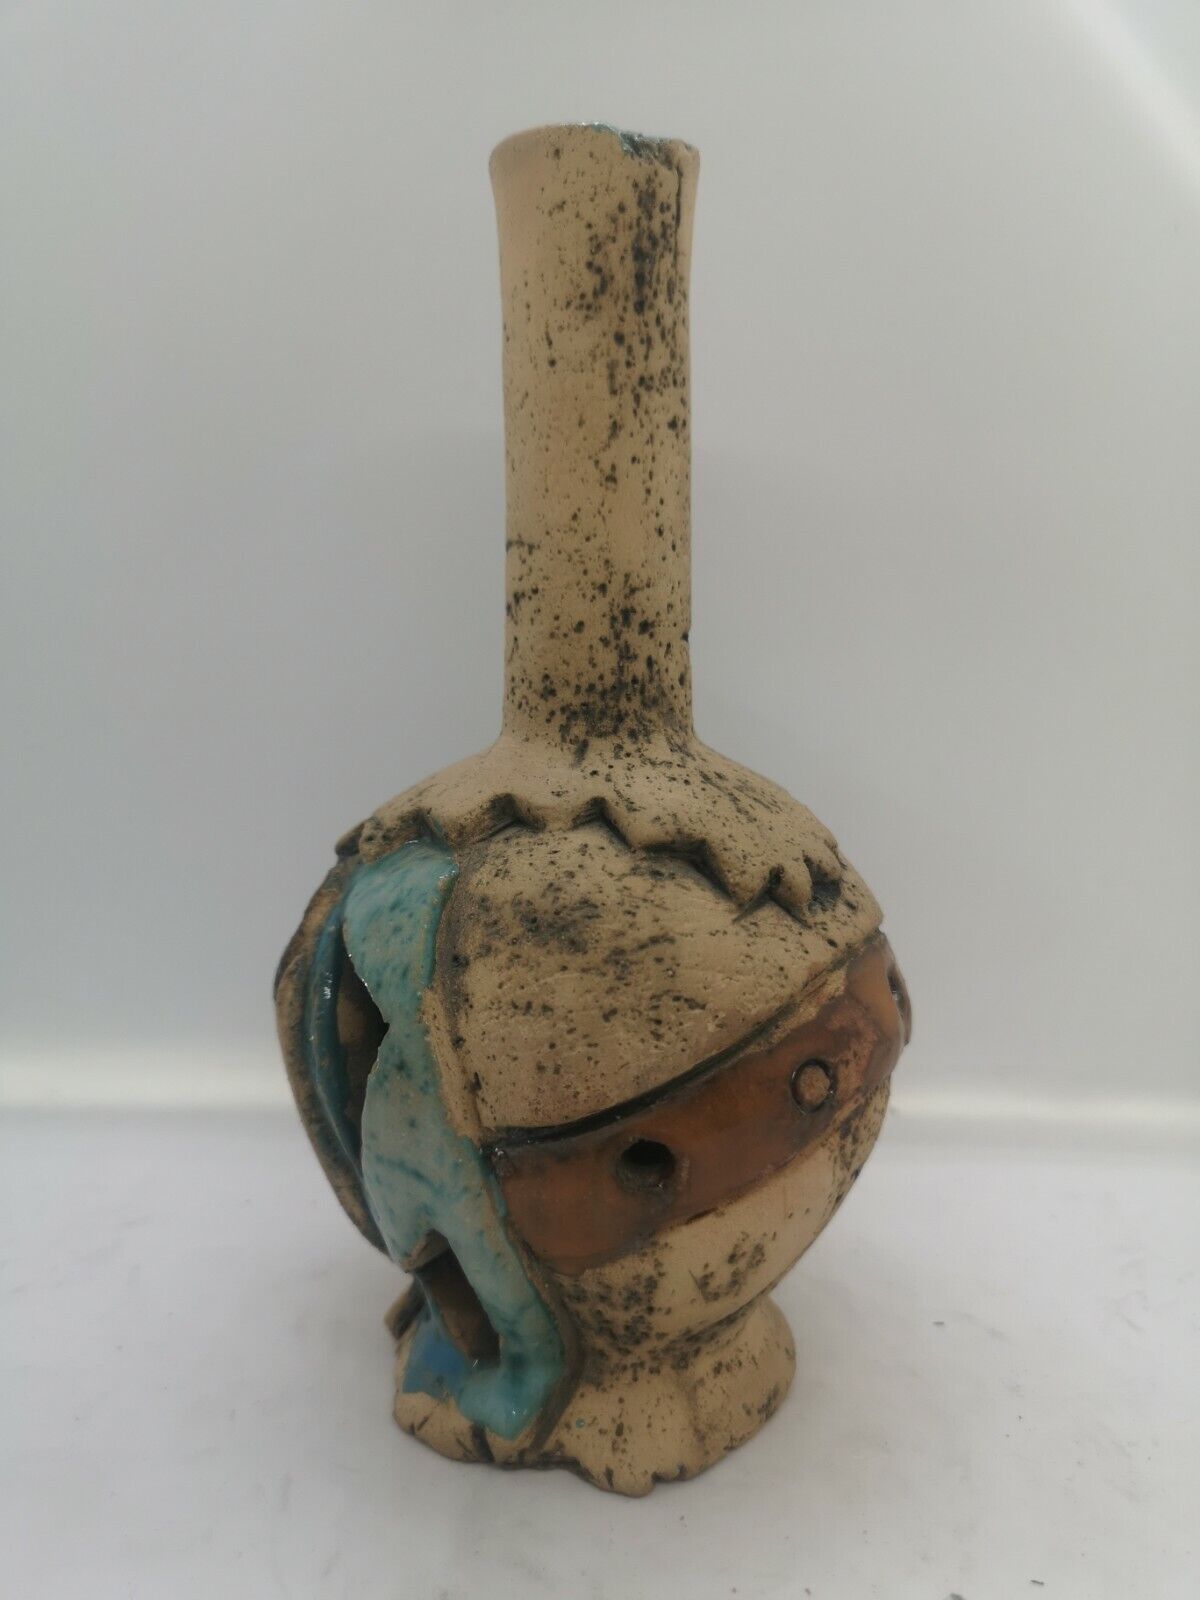 Vintage Pottery Vase Handmade Hand Painted Home Decorative Crafted Art Vintage